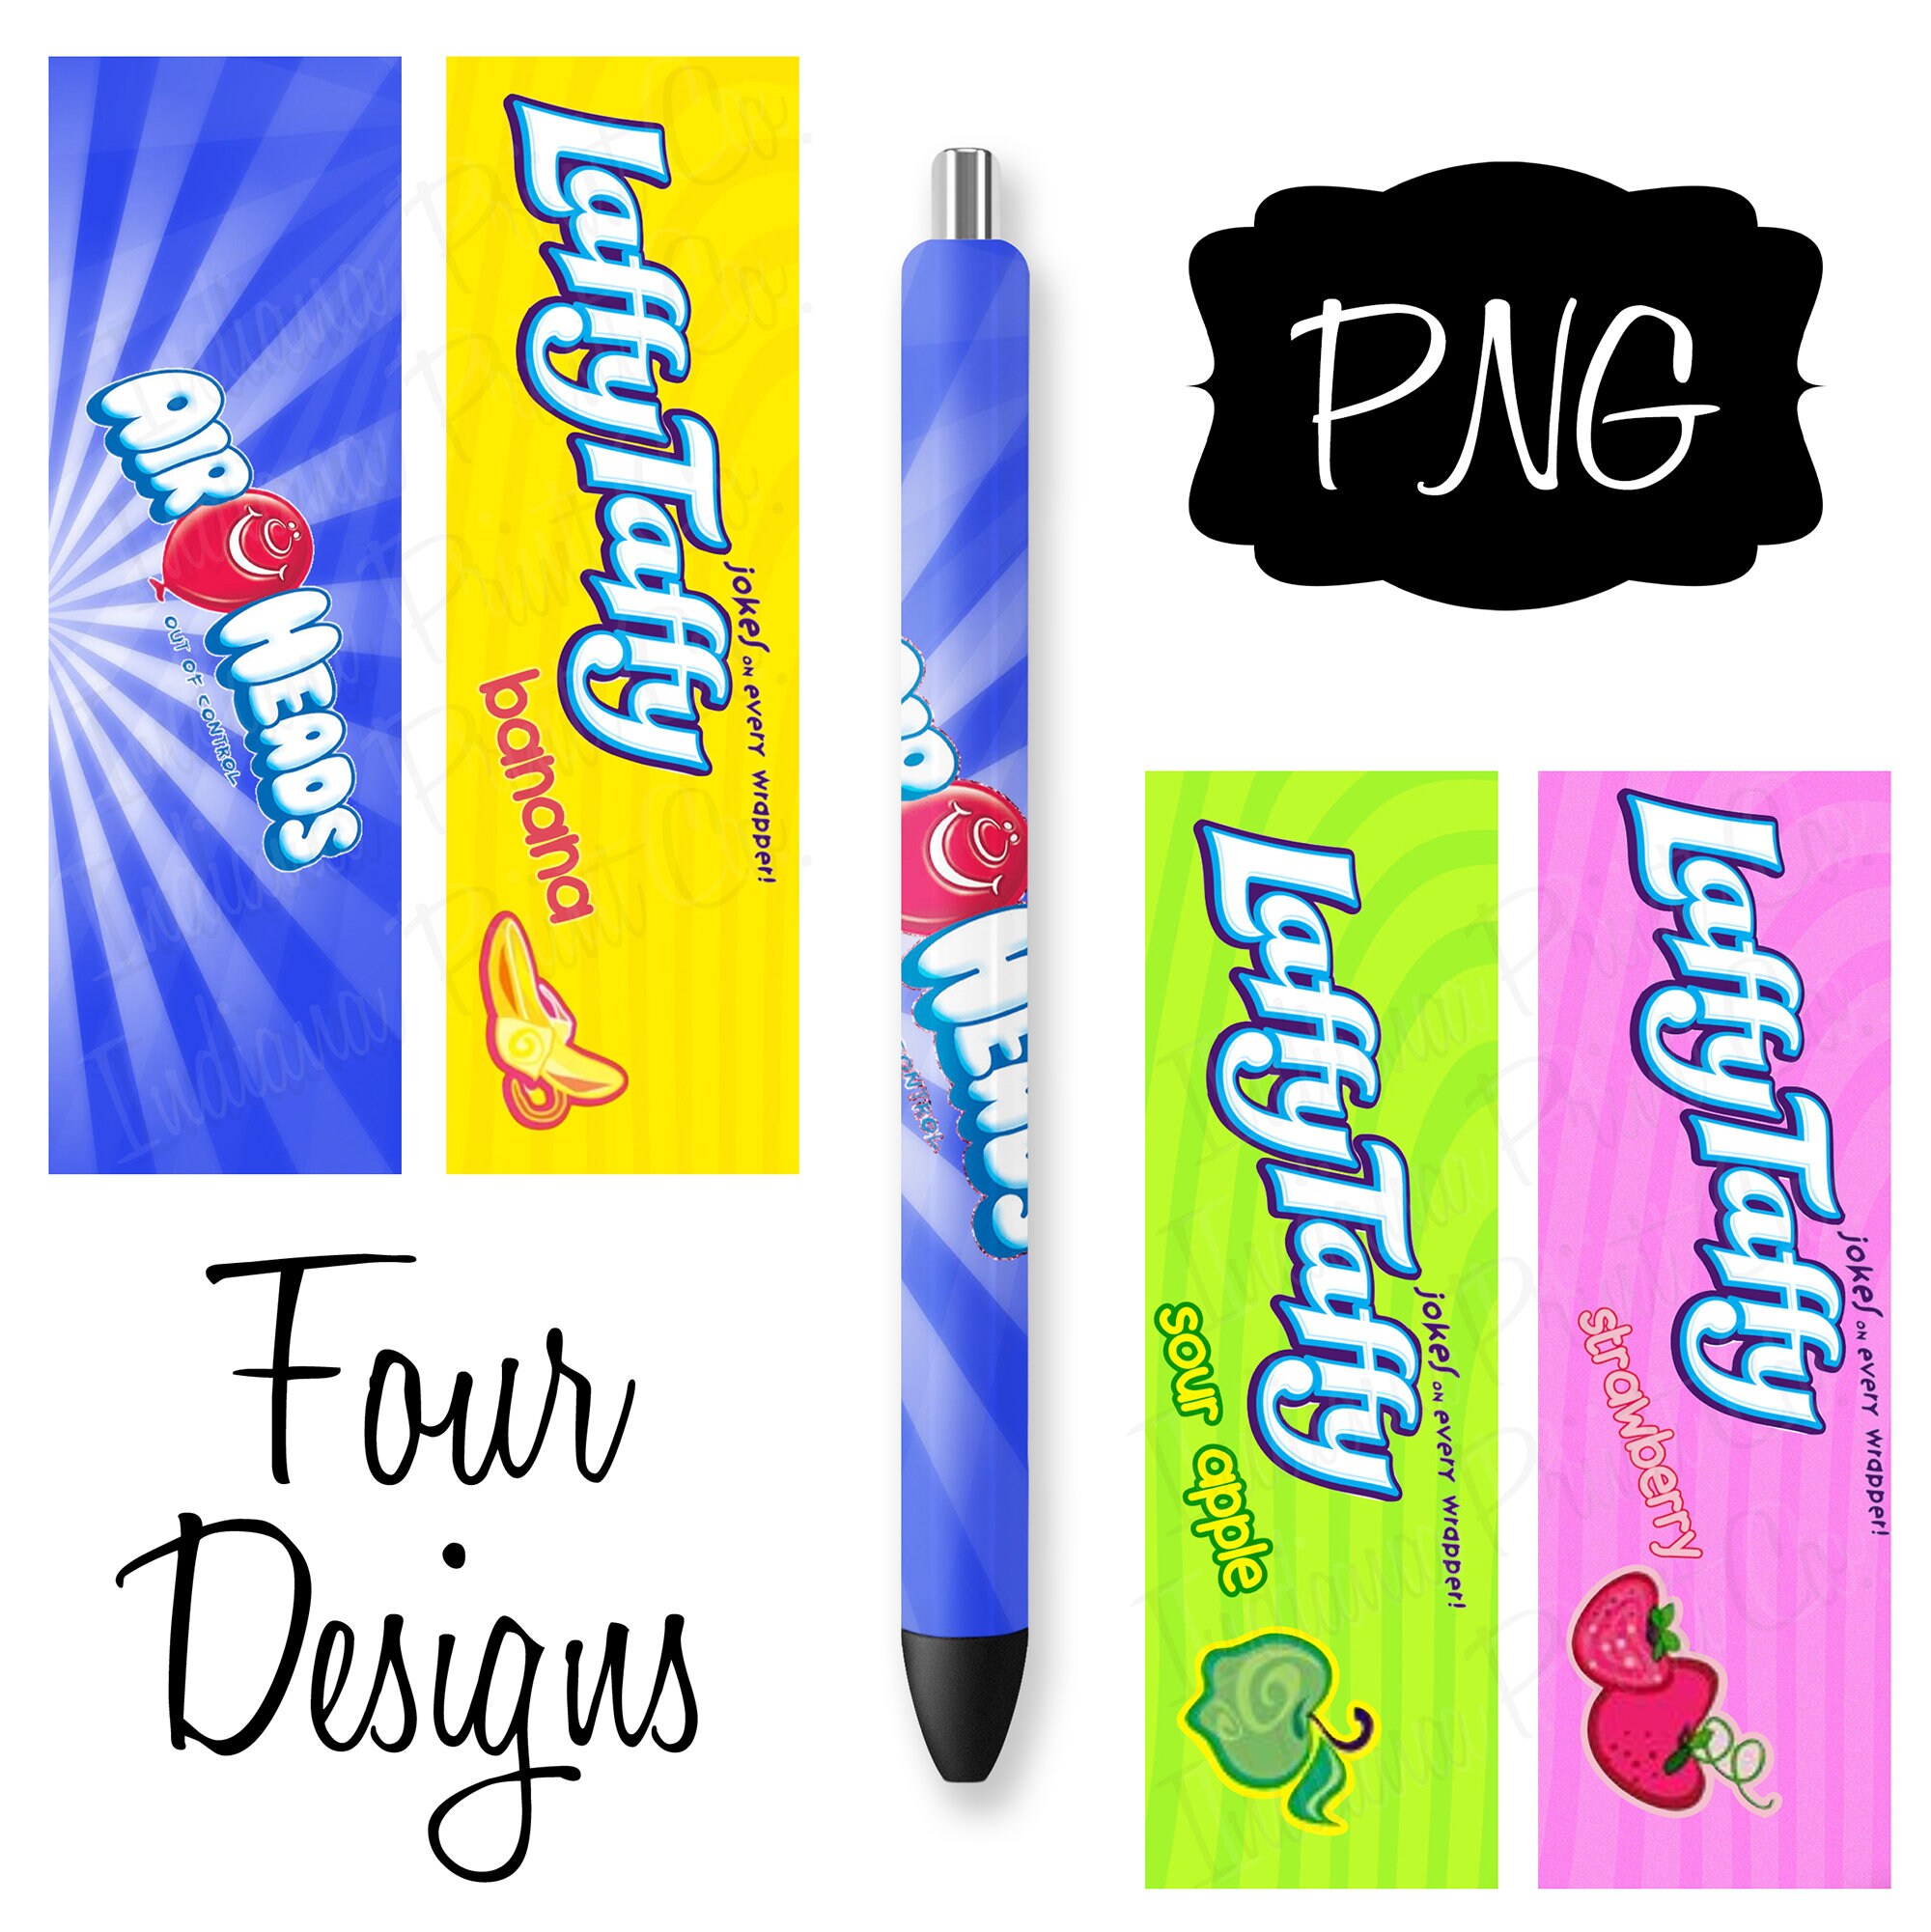 Candy Wrapper Pen Wraps Digital Download